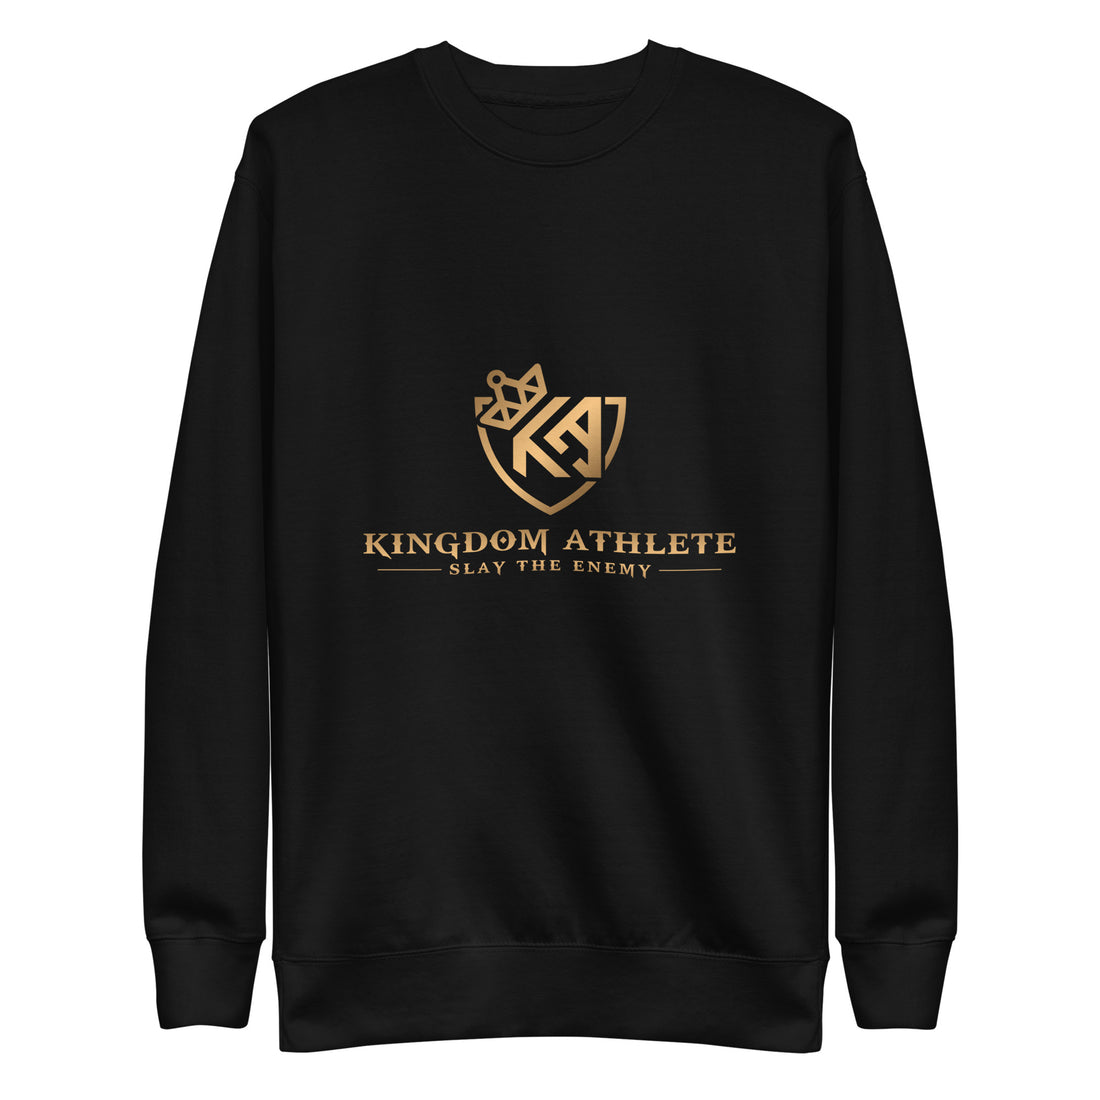 Unisex Premium Sweatshirt - kingdom athlete s